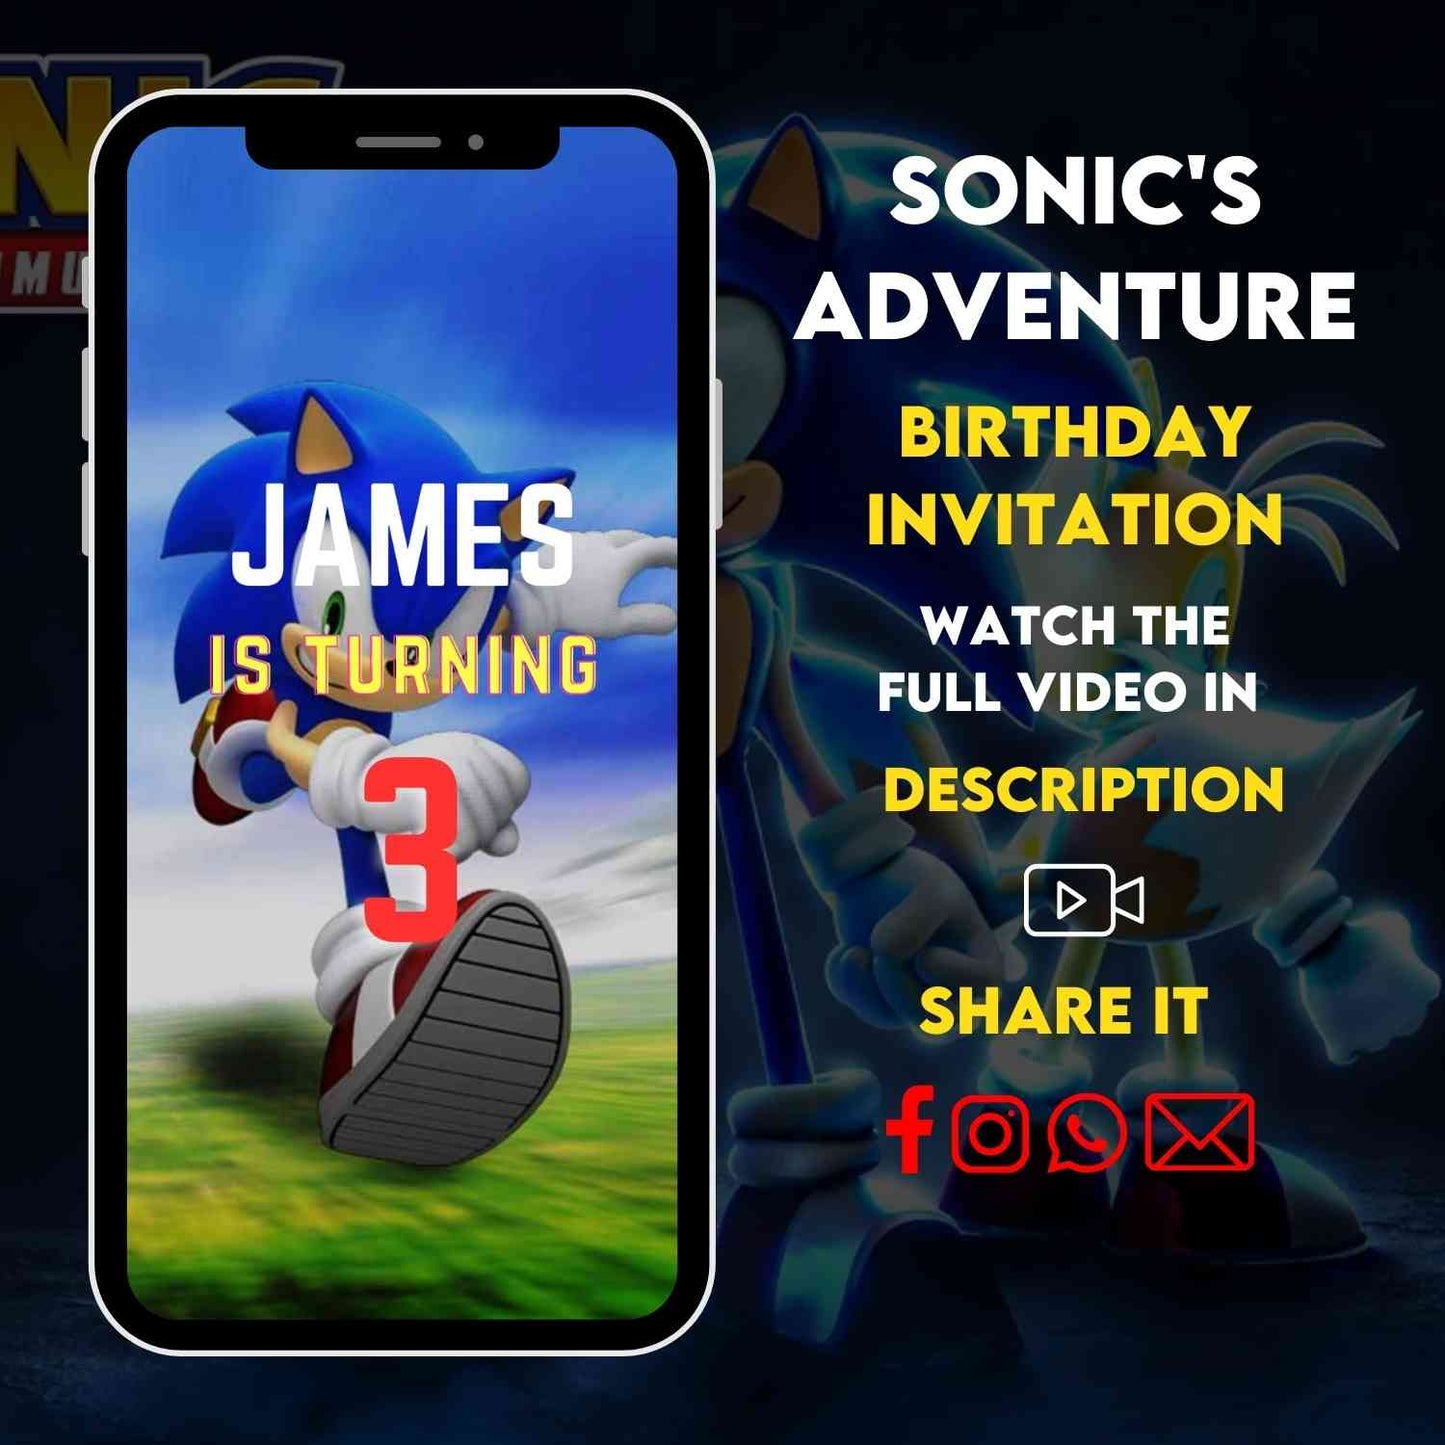 Jump into Sonic's Adventure! Animated & Personalized Sonic Birthday Video Invitation